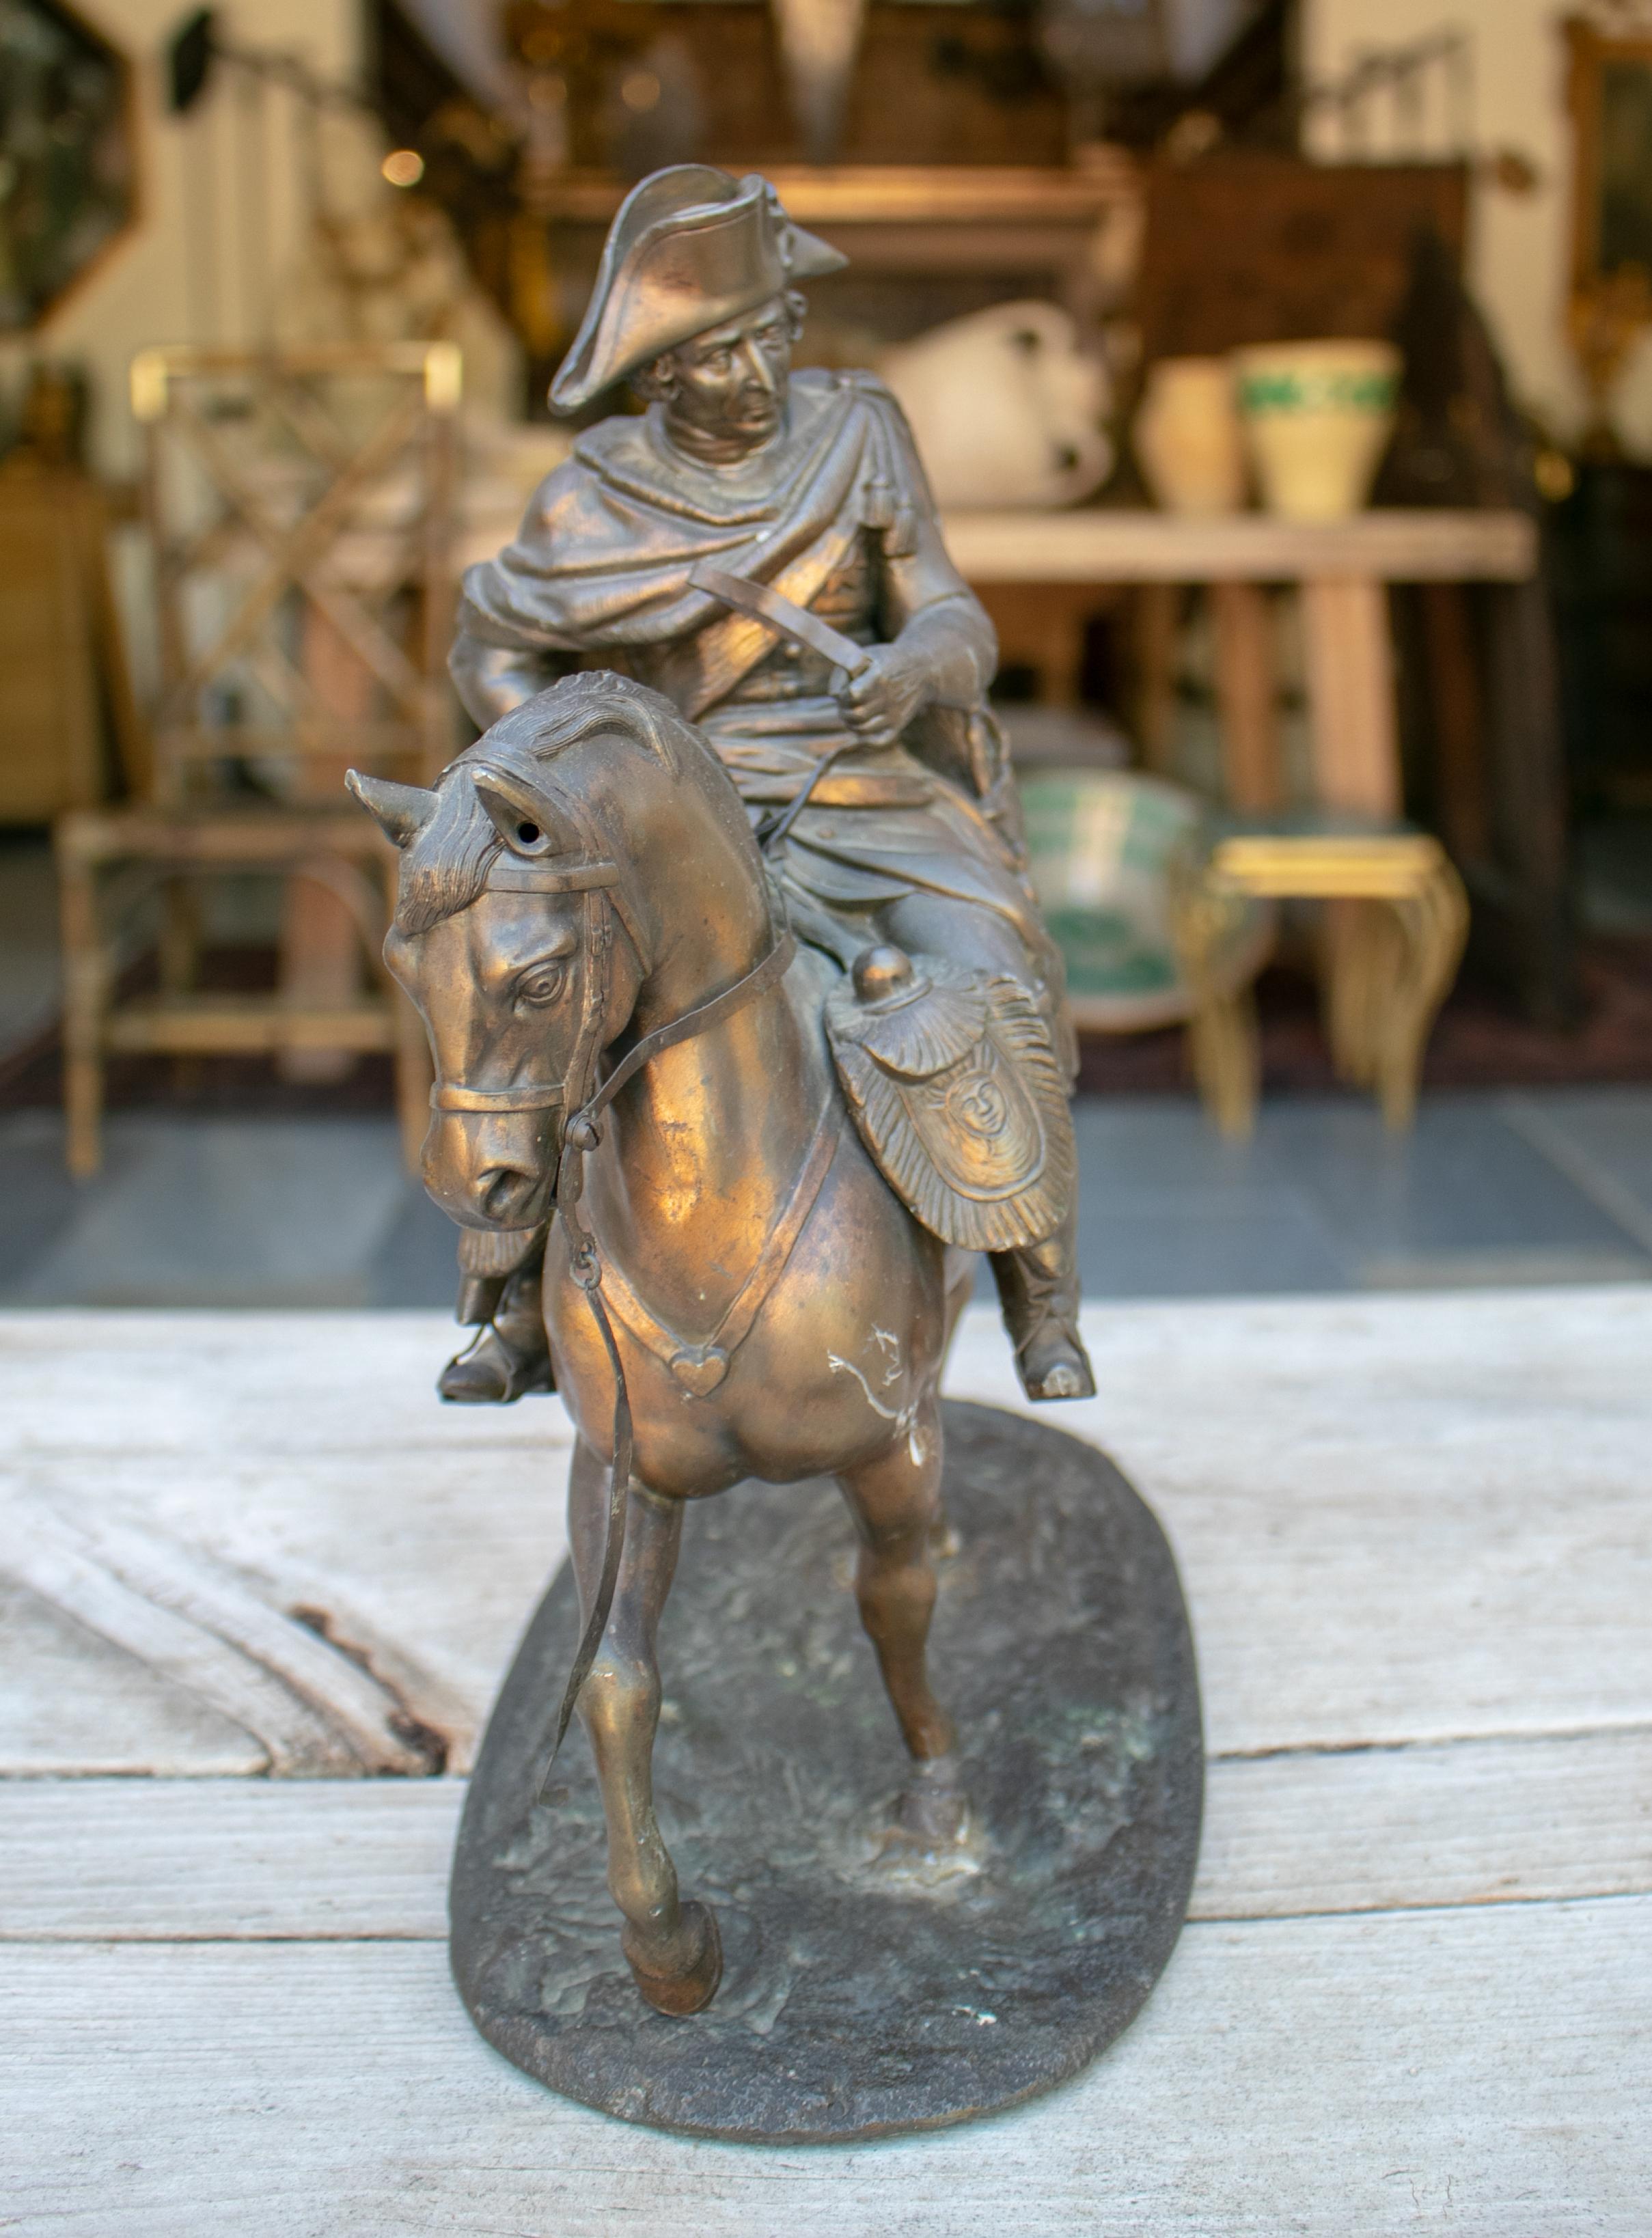 1900s bronze figure sculpture of the Duke of Wellington on his horse Copenhagen.